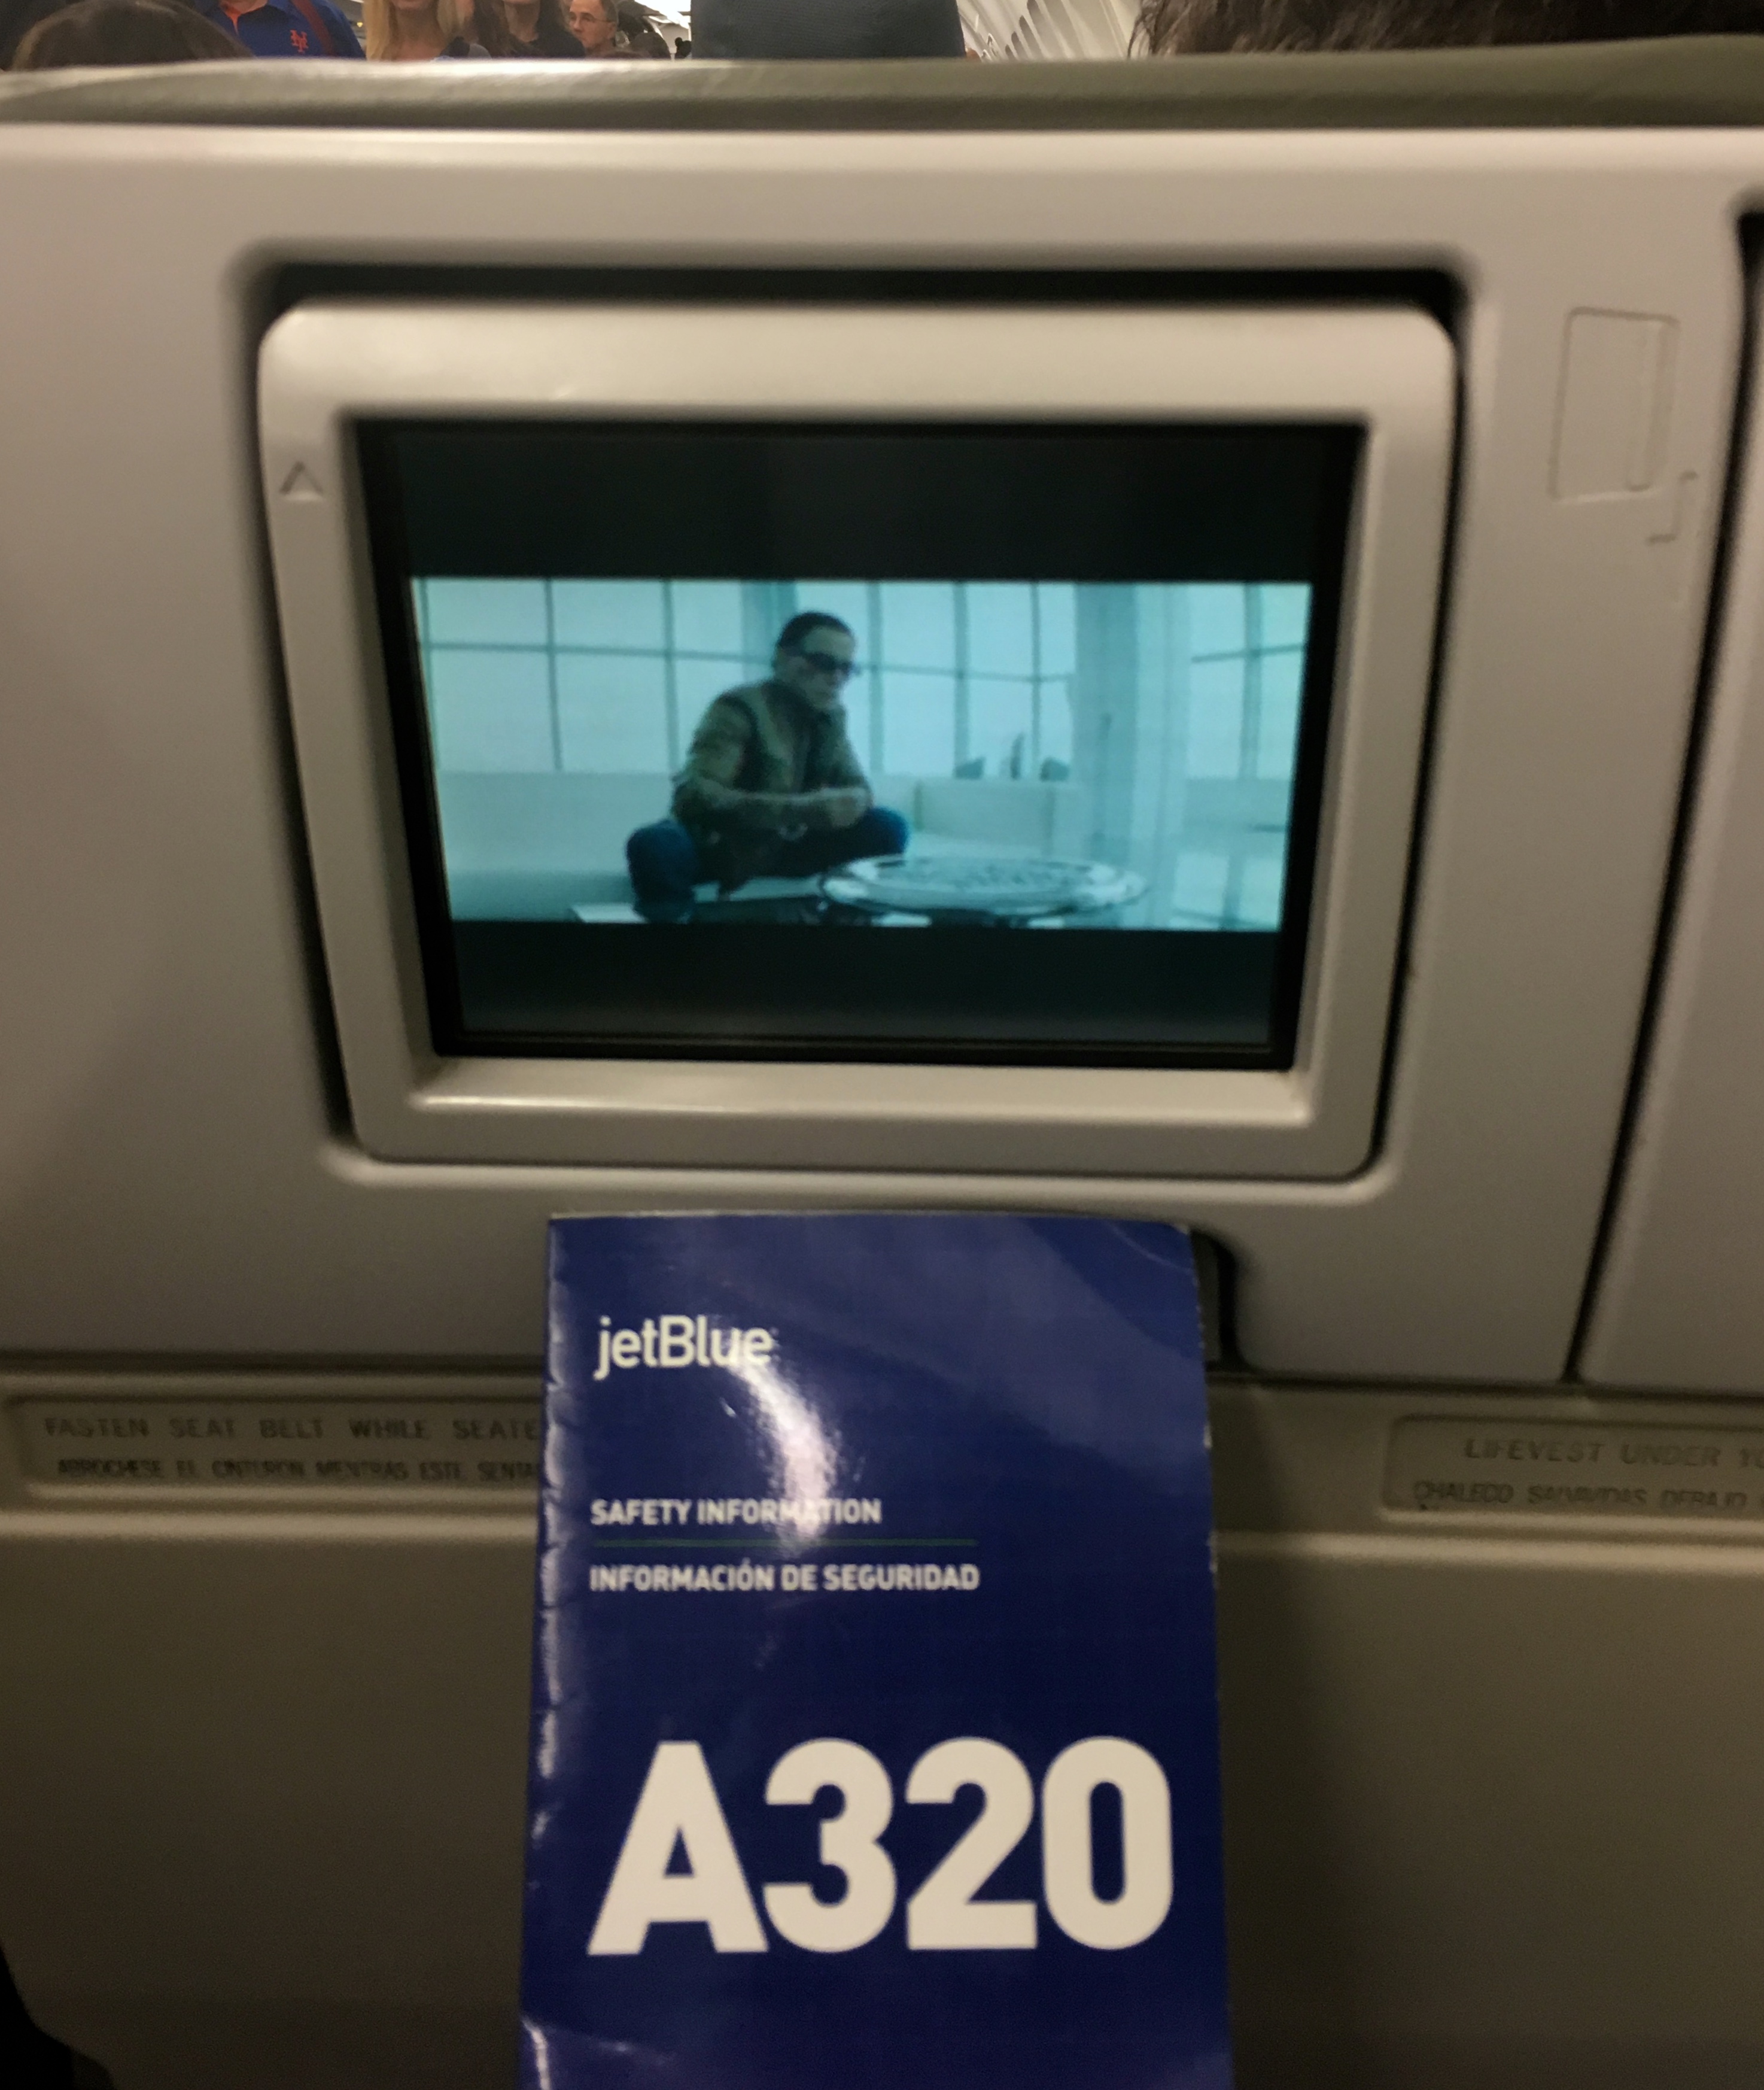 JetBlue A320 video screen